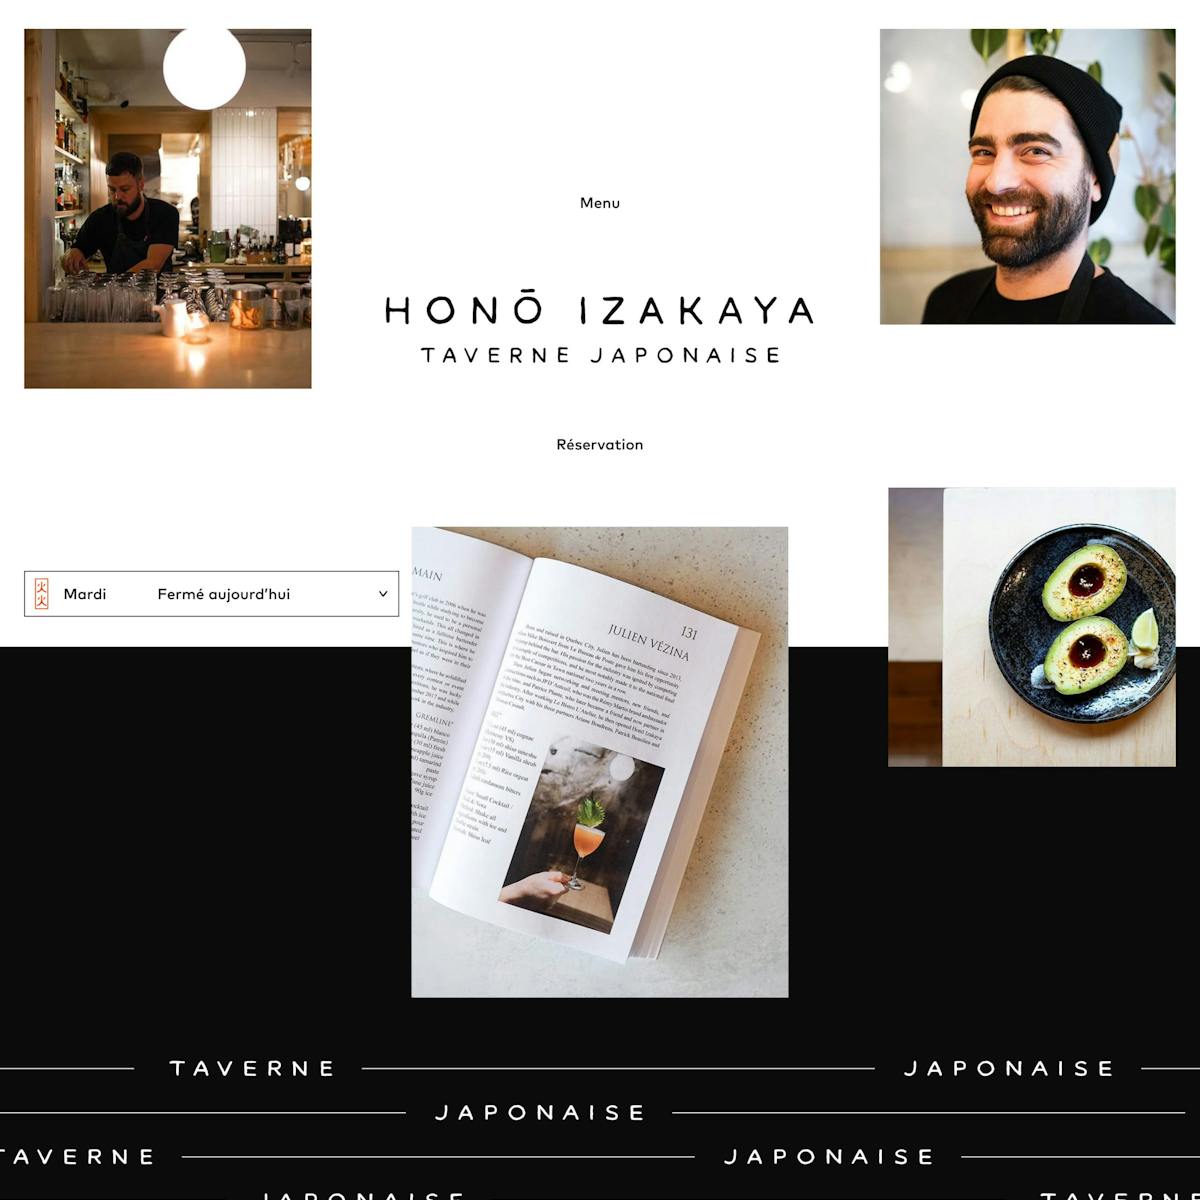 website design idea #598: Website Inspiration: Hono Izakaya